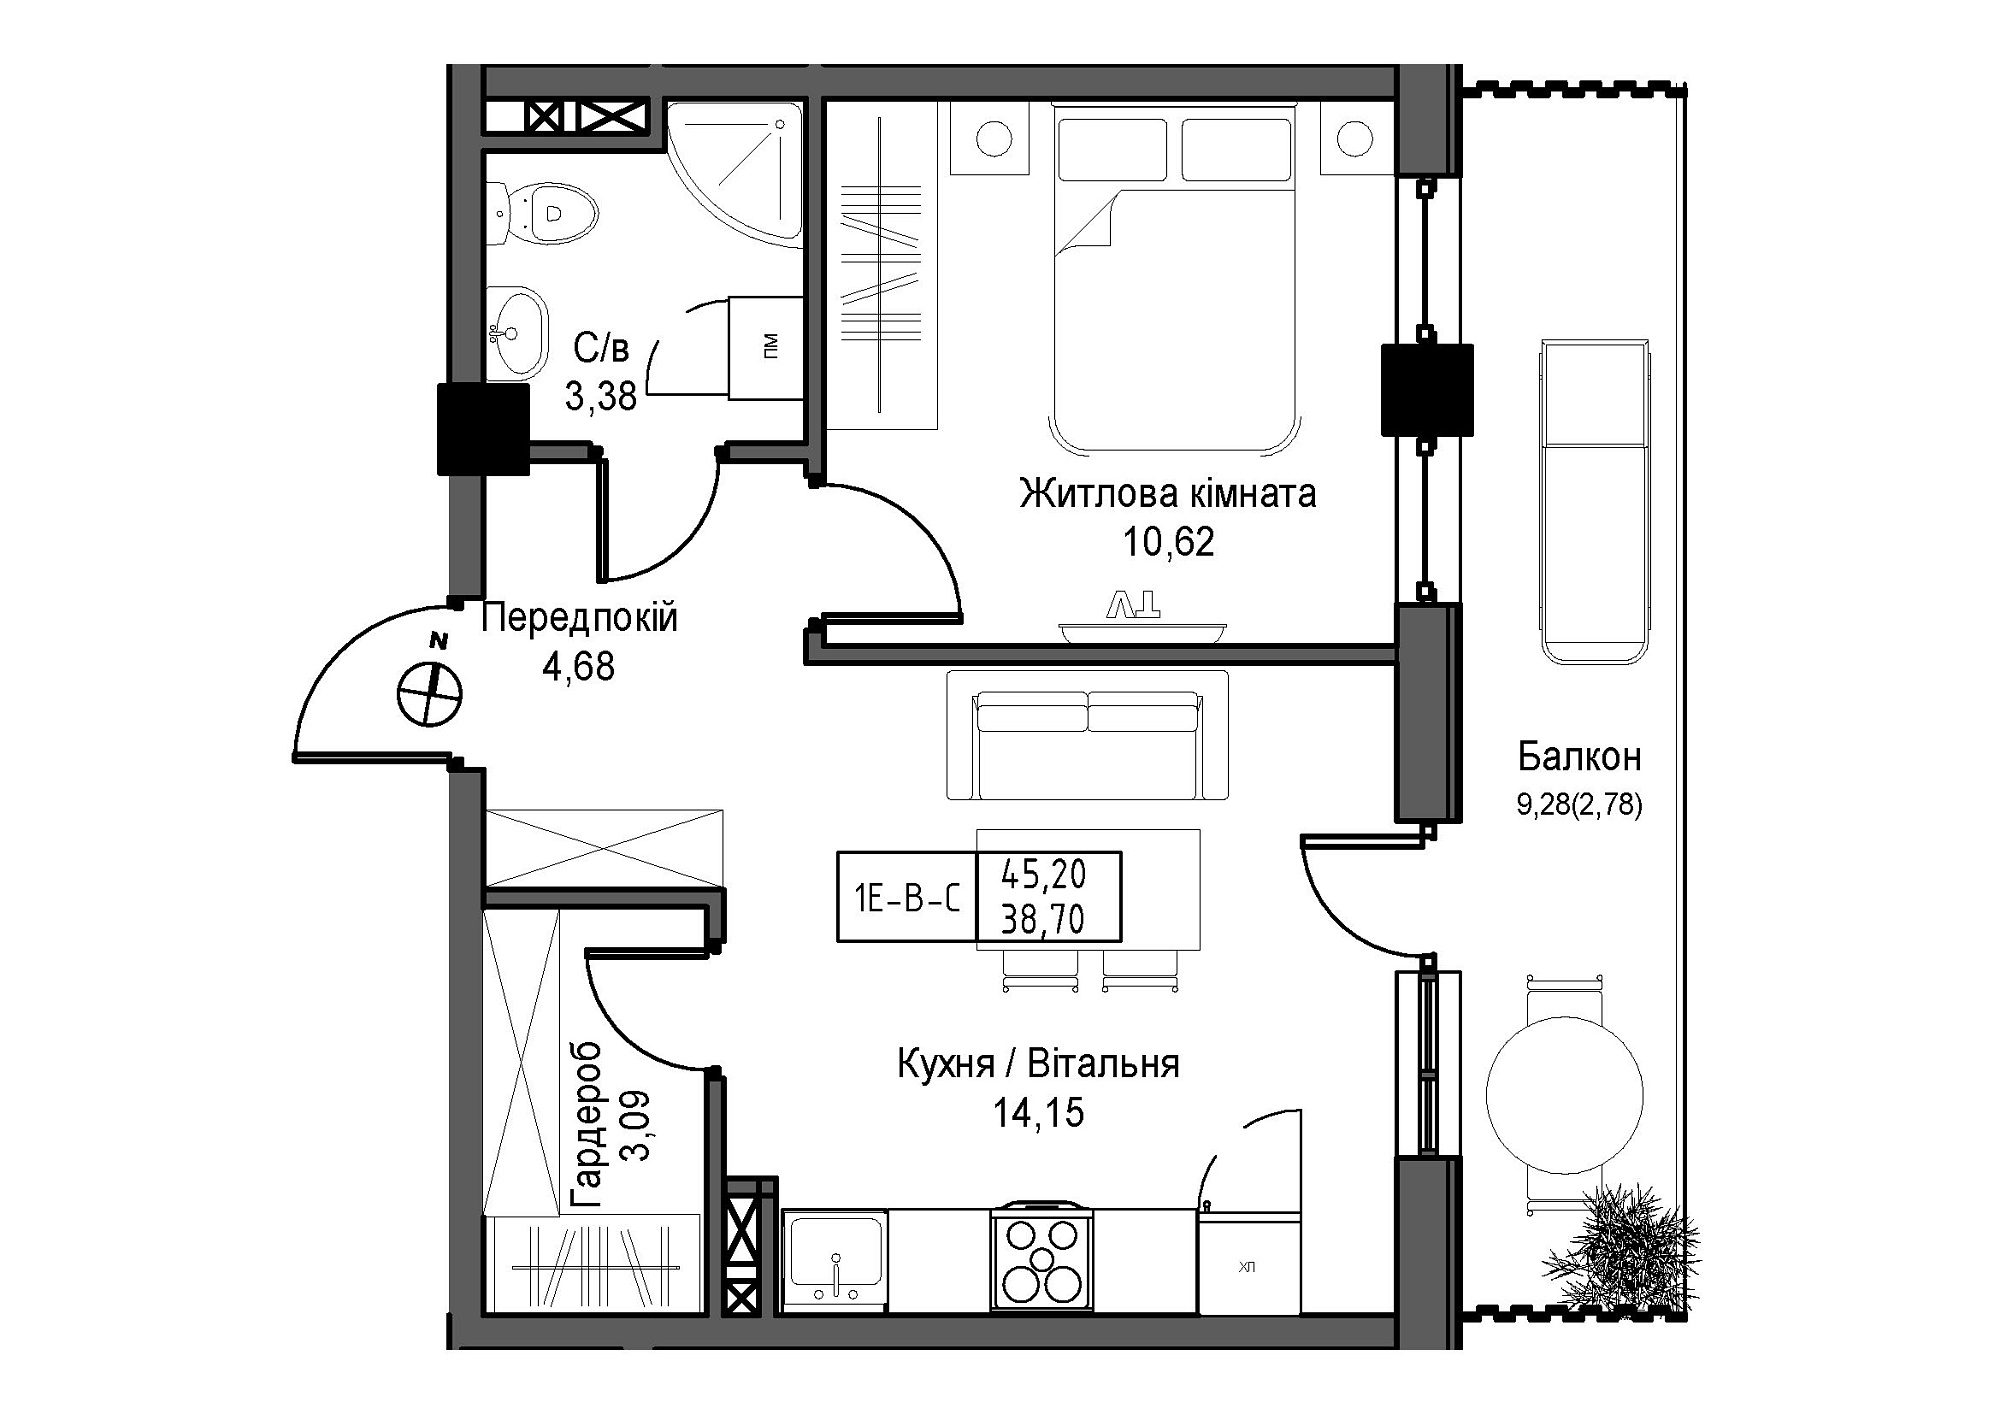 Планування 1-к квартира площею 38.7м2, UM-007-06/0006.